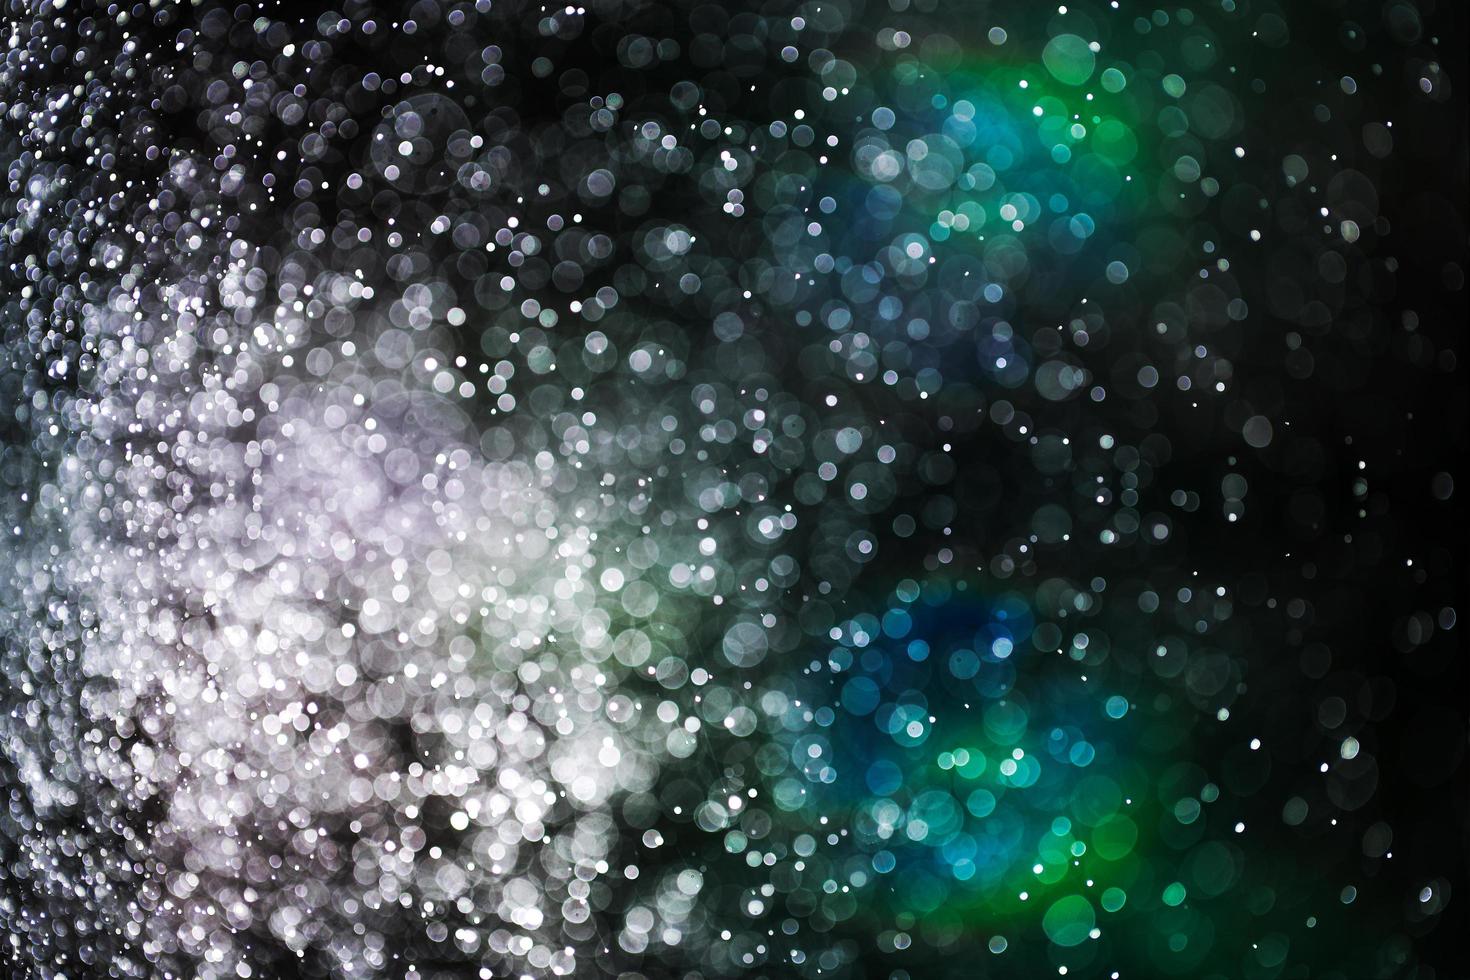 fundo abstrato de spray de água, semelhante a estrela ou galáxia usando como papel de parede foto